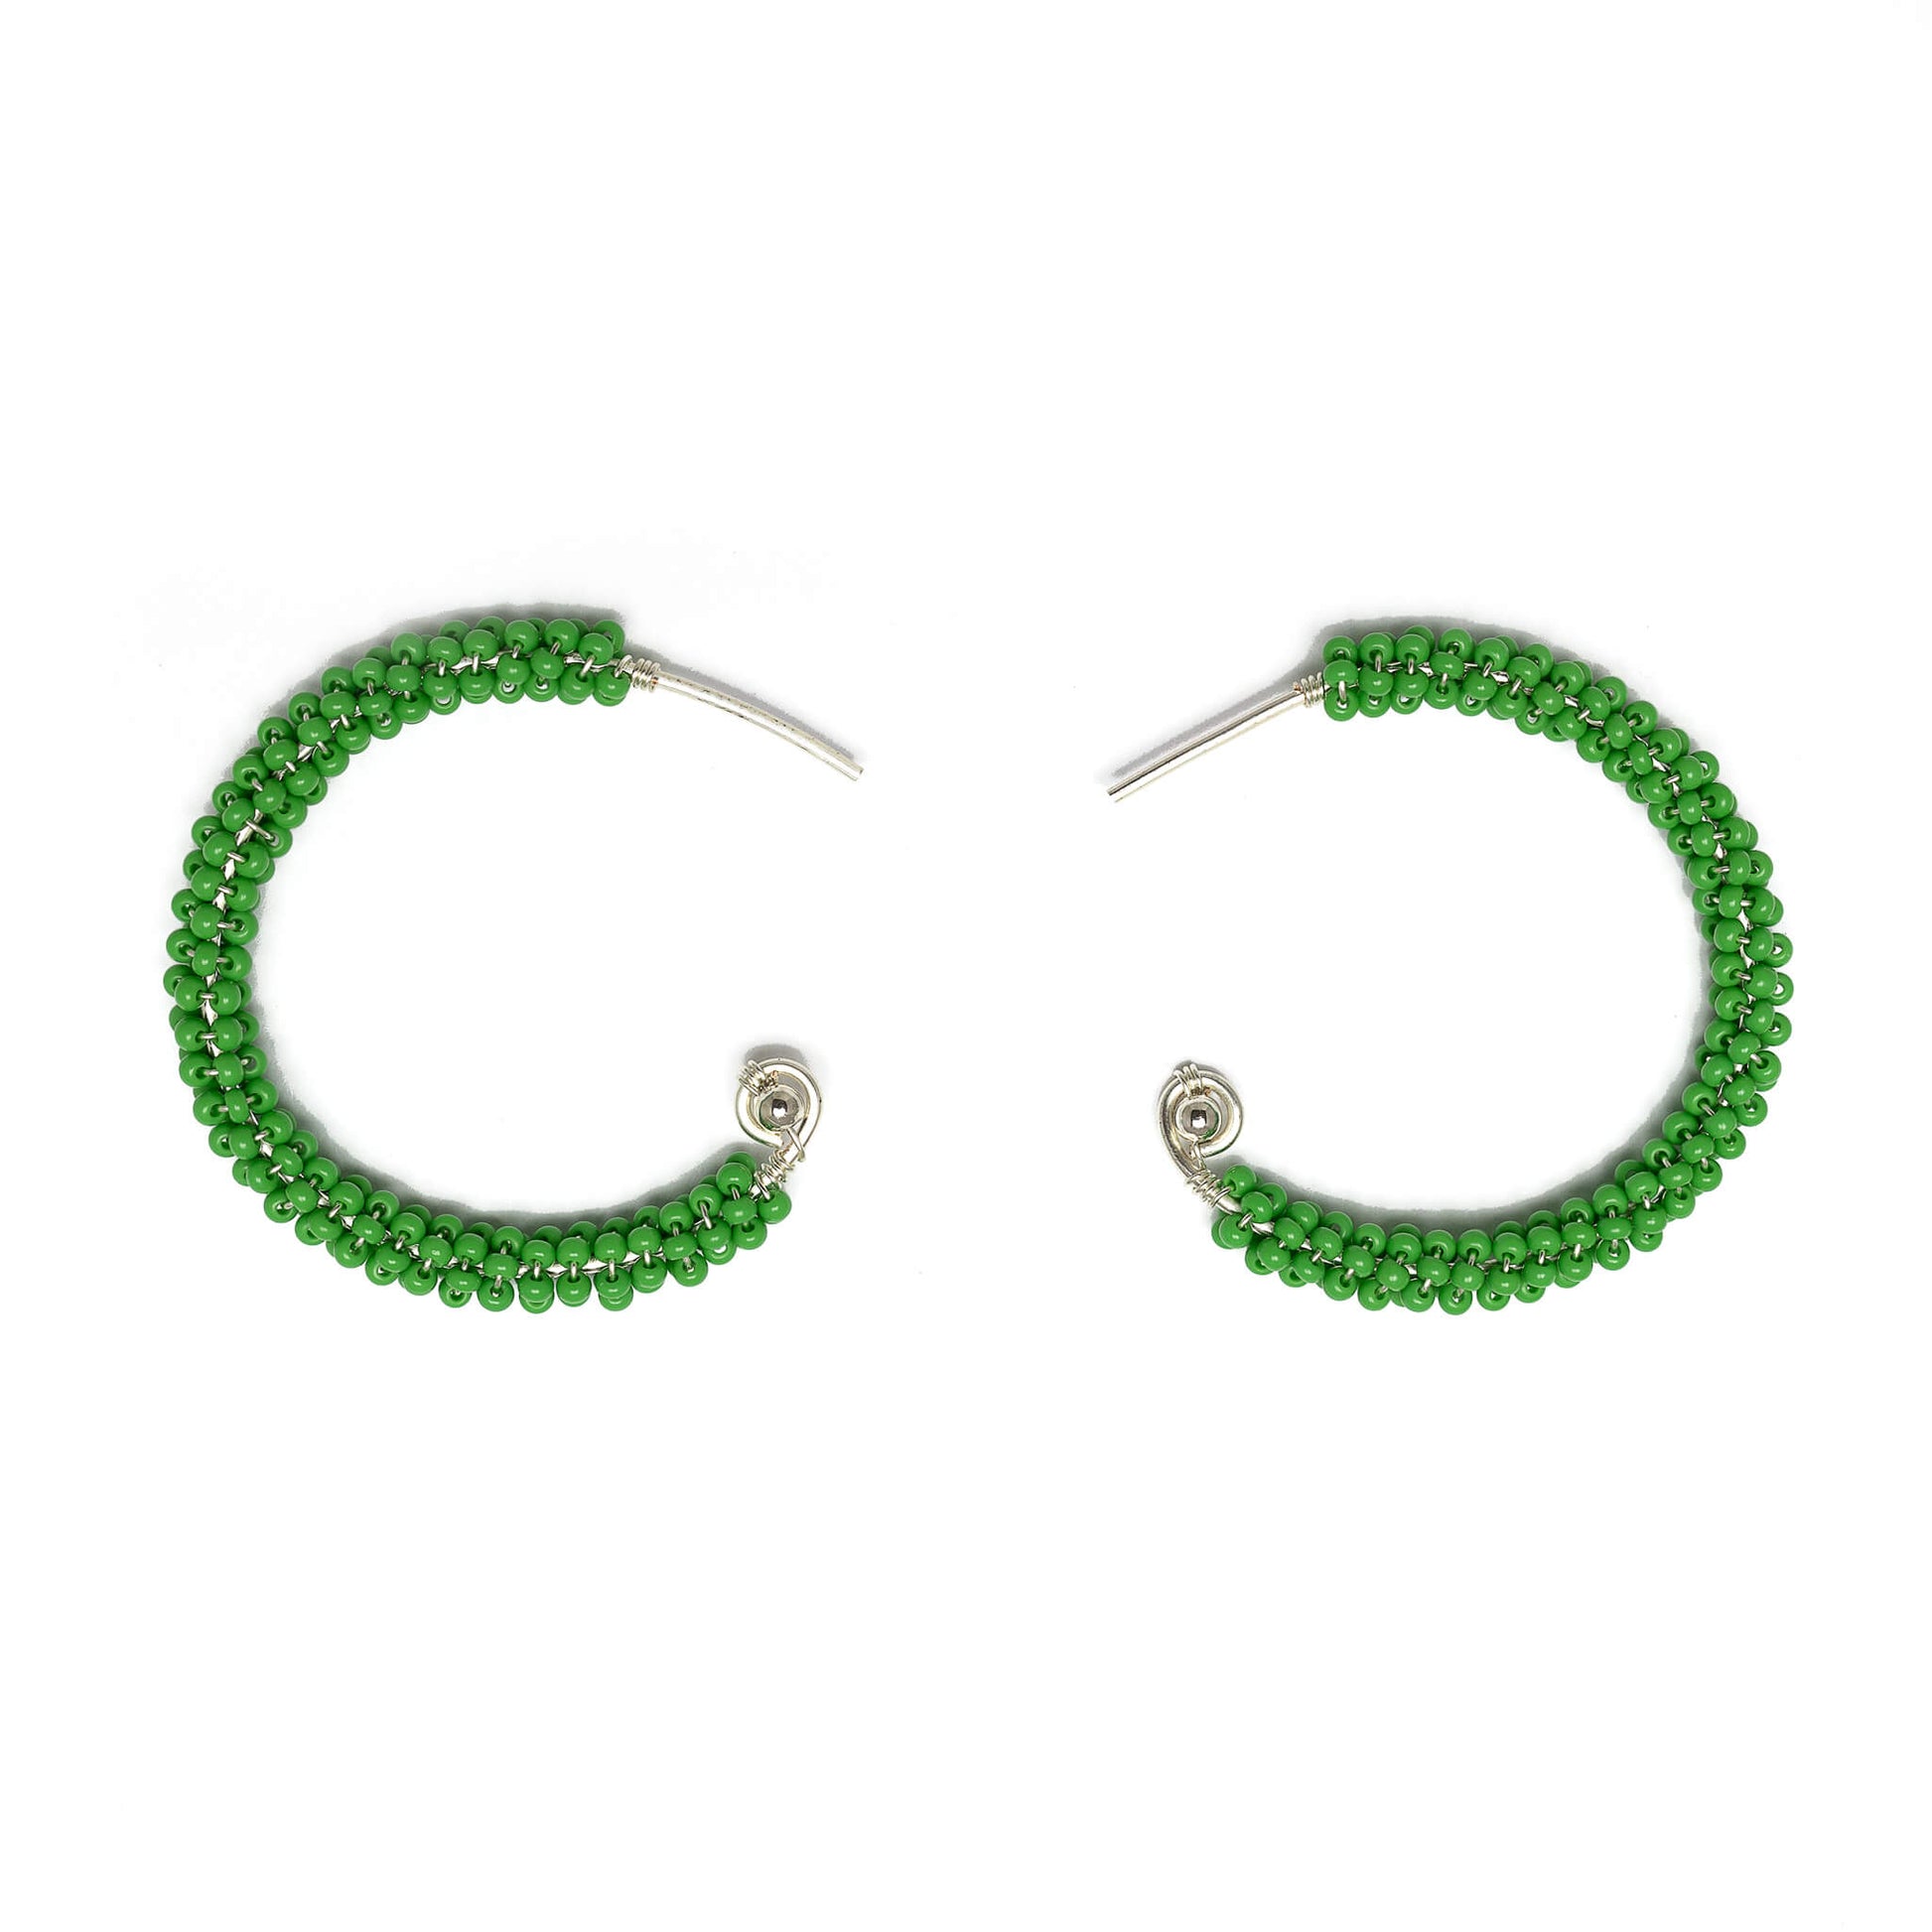 Florence Silver Hoop Earrings are 1.5 inches long, Silver and Green Earrings. Wire Wrapped Earrings. Lightweight and comfortable earrings. Handmade for women. Open hoop earrings